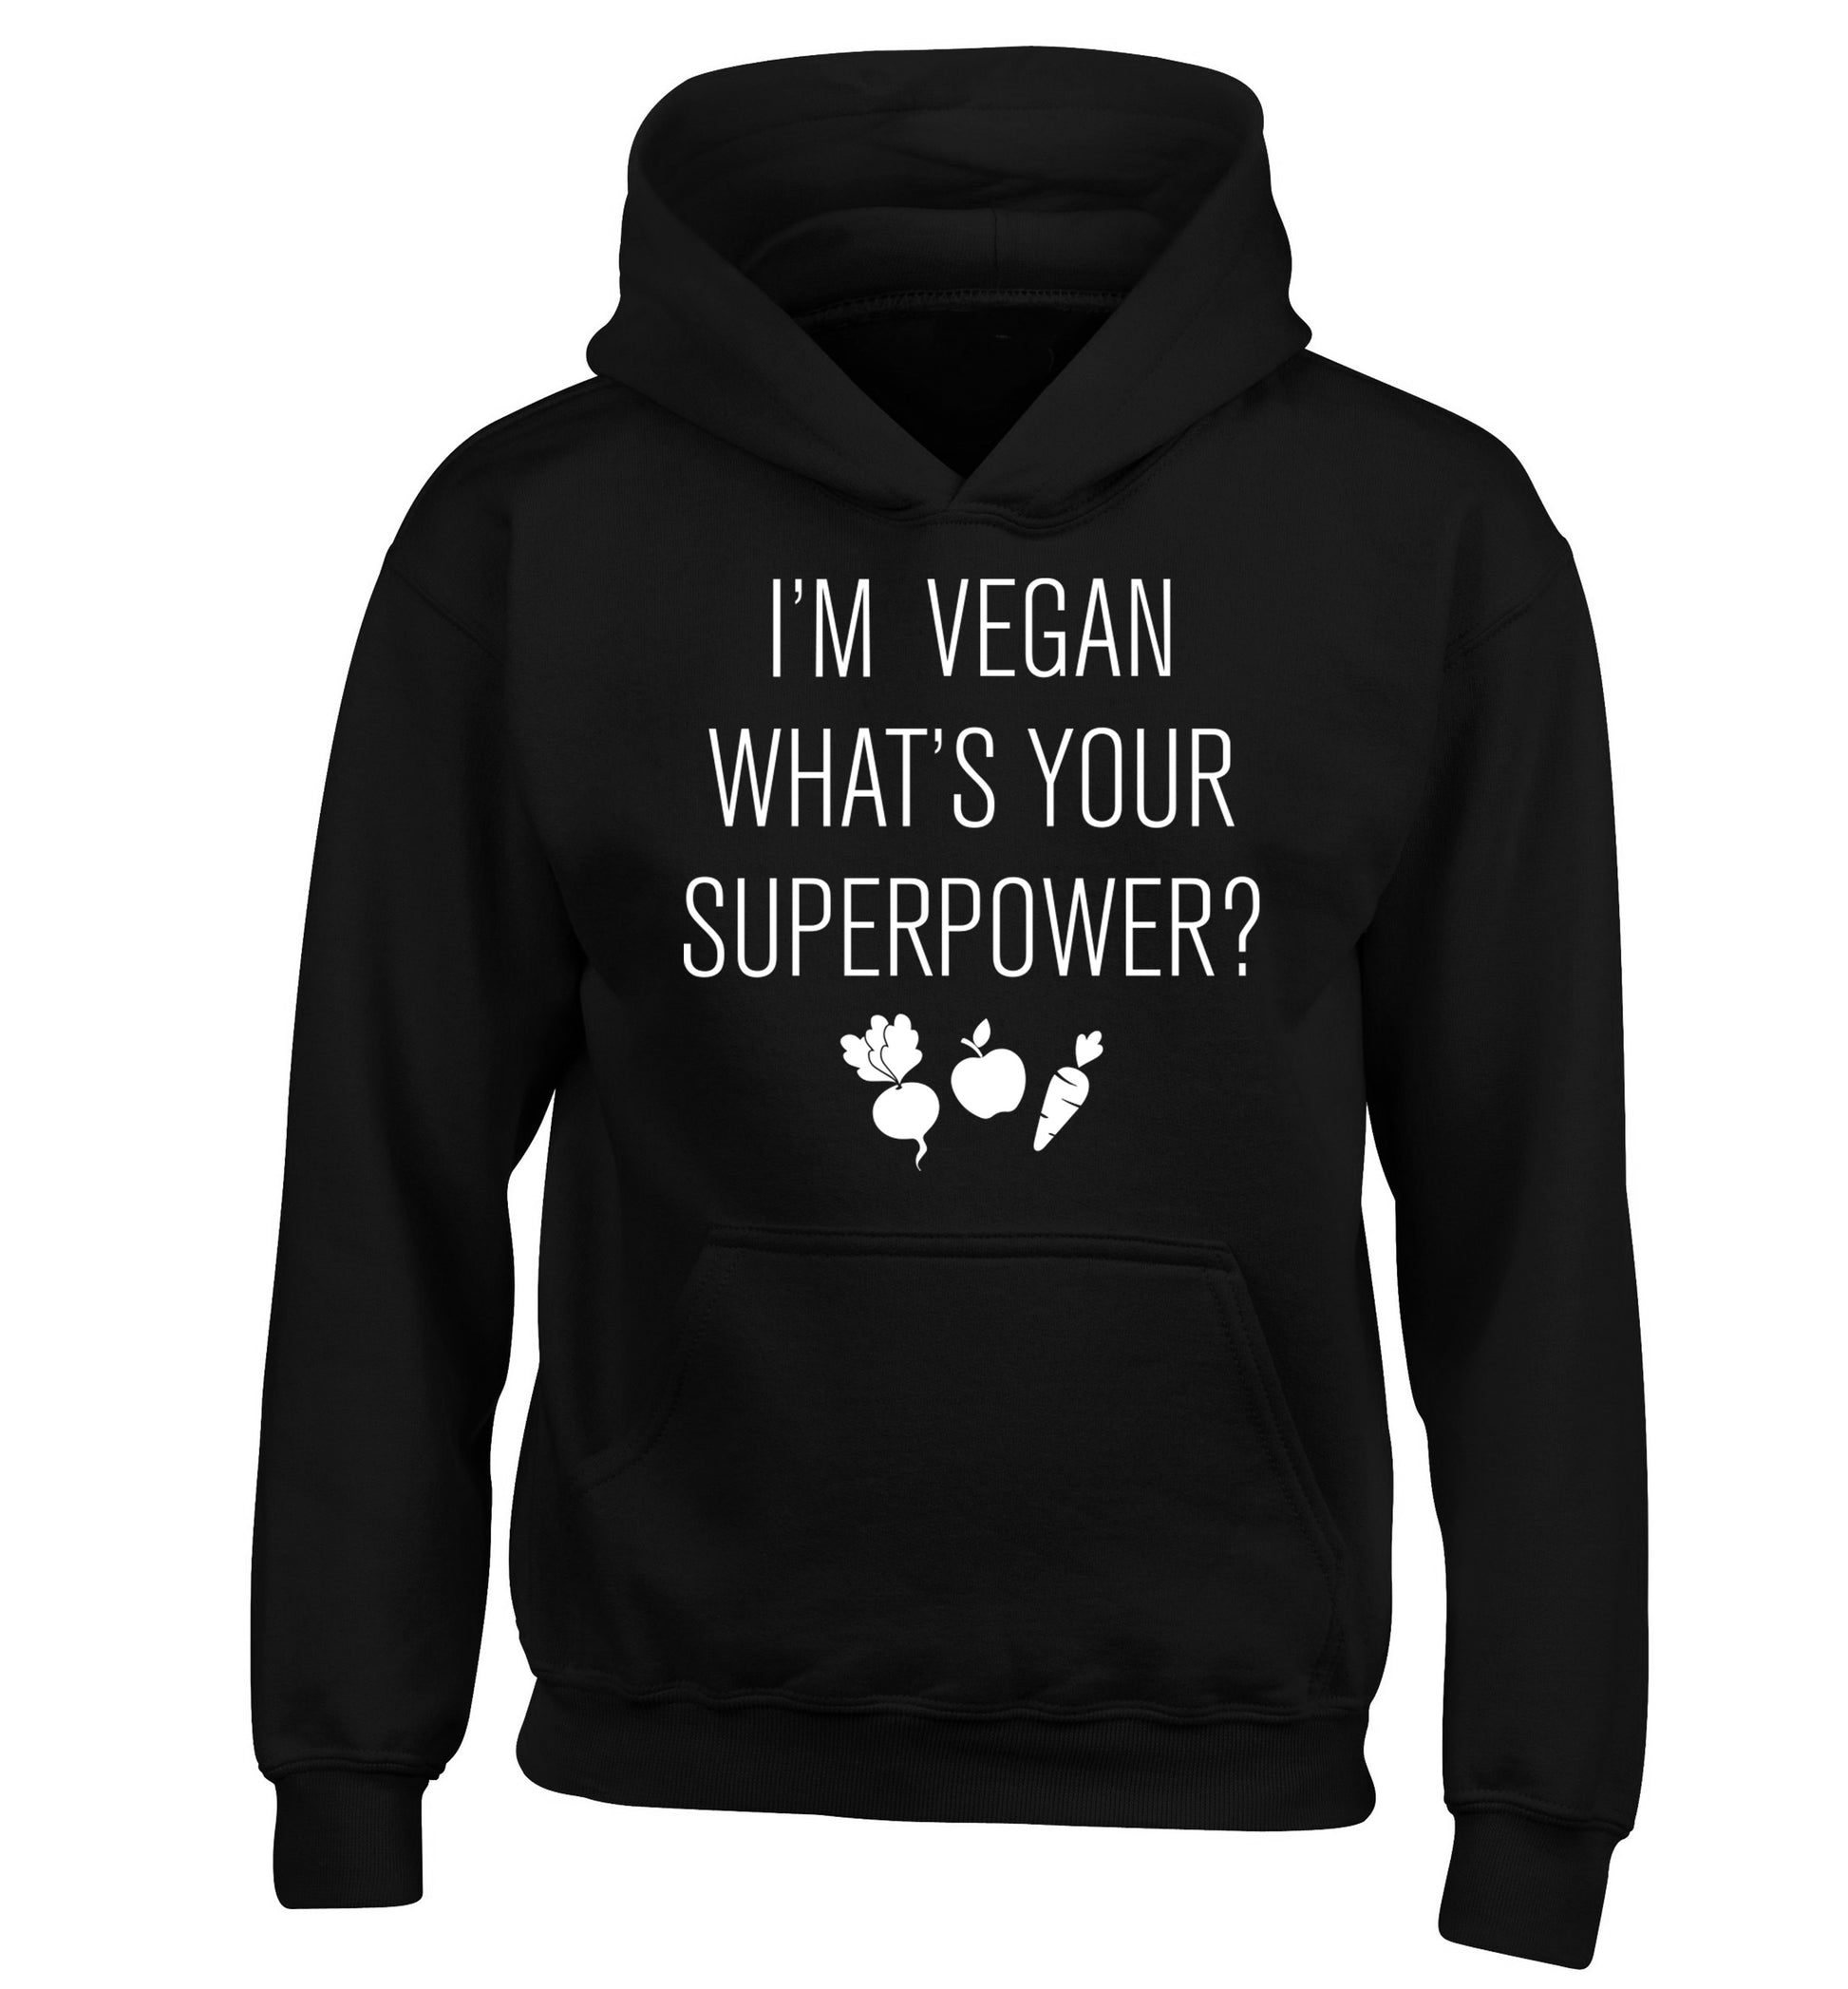 I'm Vegan What's Your Superpower? children's black hoodie 12-13 Years